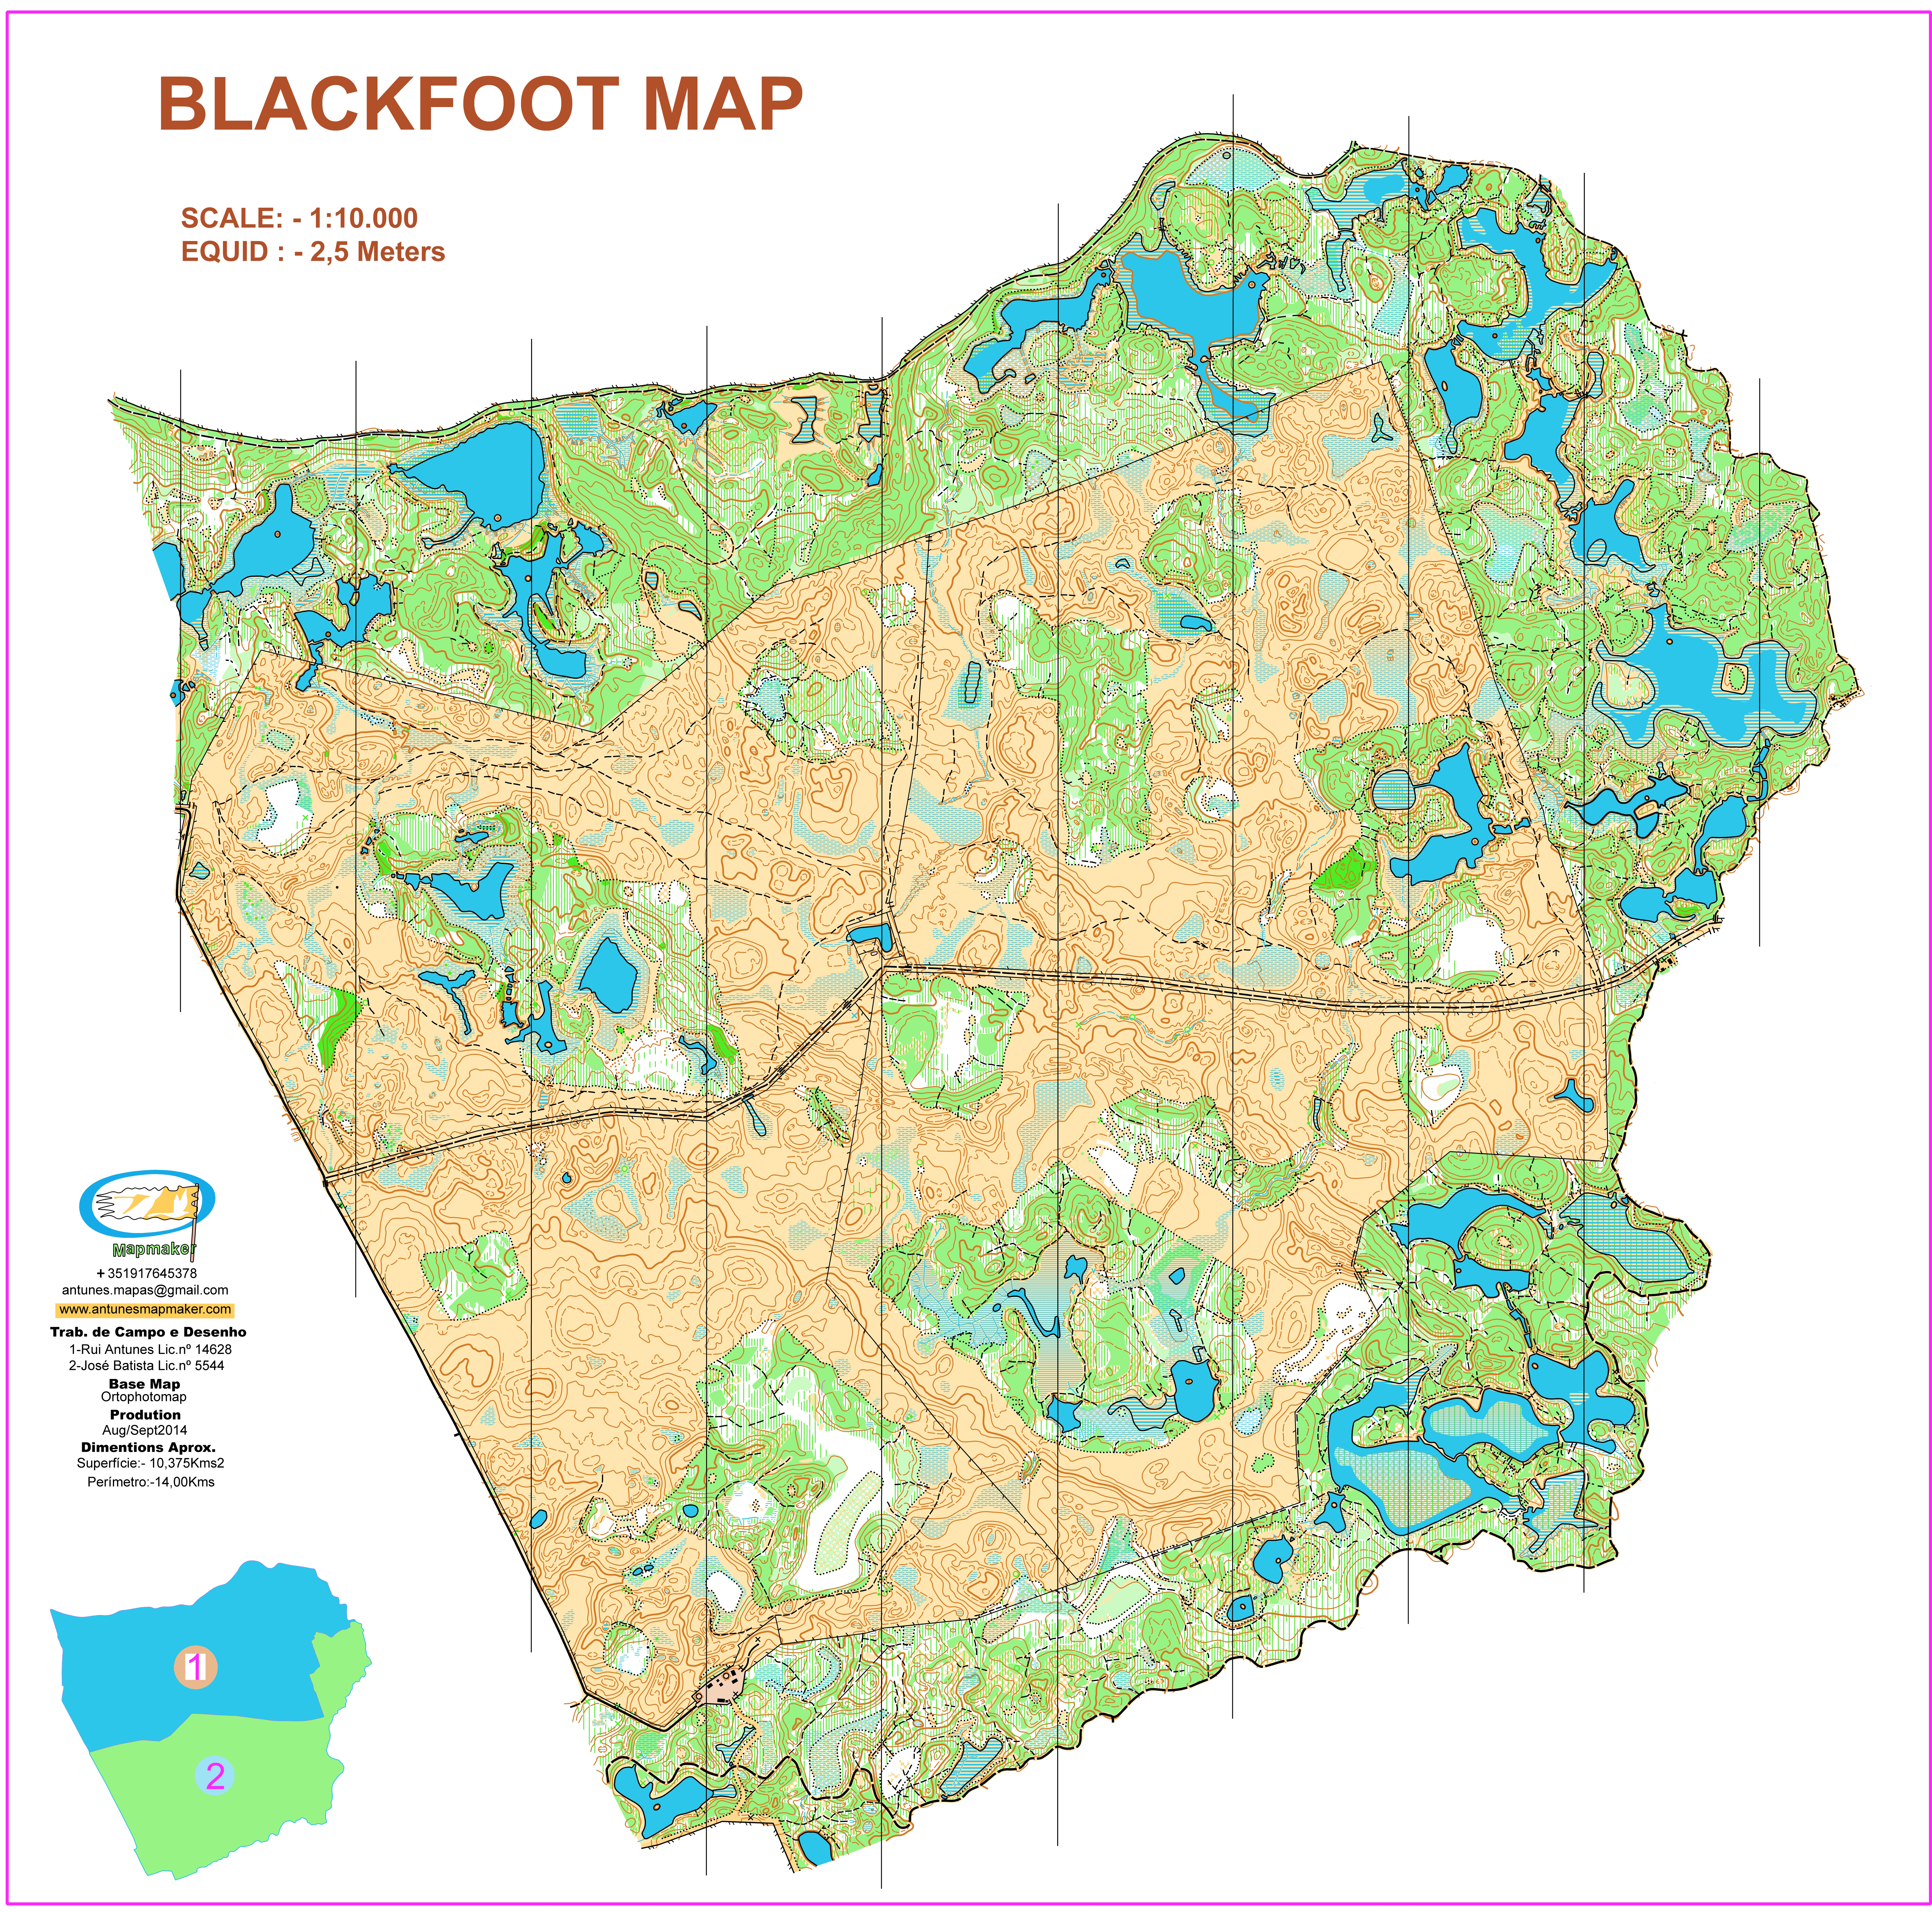 (169) - Blackfoot Lake Map - Canada Aug / Sept2014